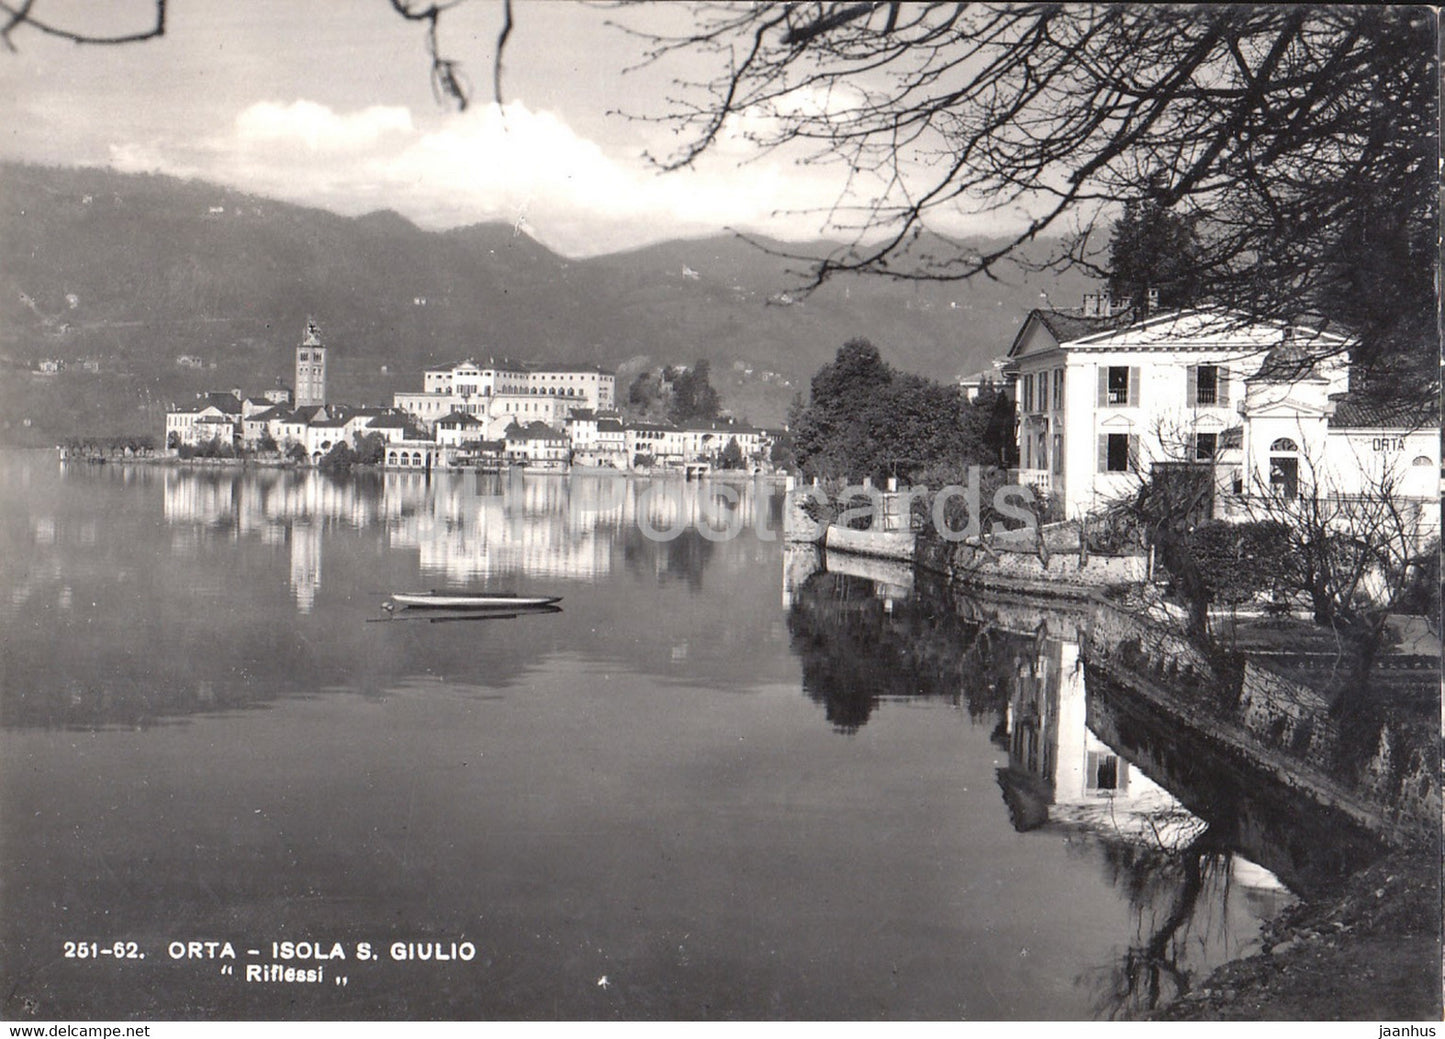 Orta - Isola S Giulio - Riflessi - old postcard - 1957 - Italy - used - JH Postcards